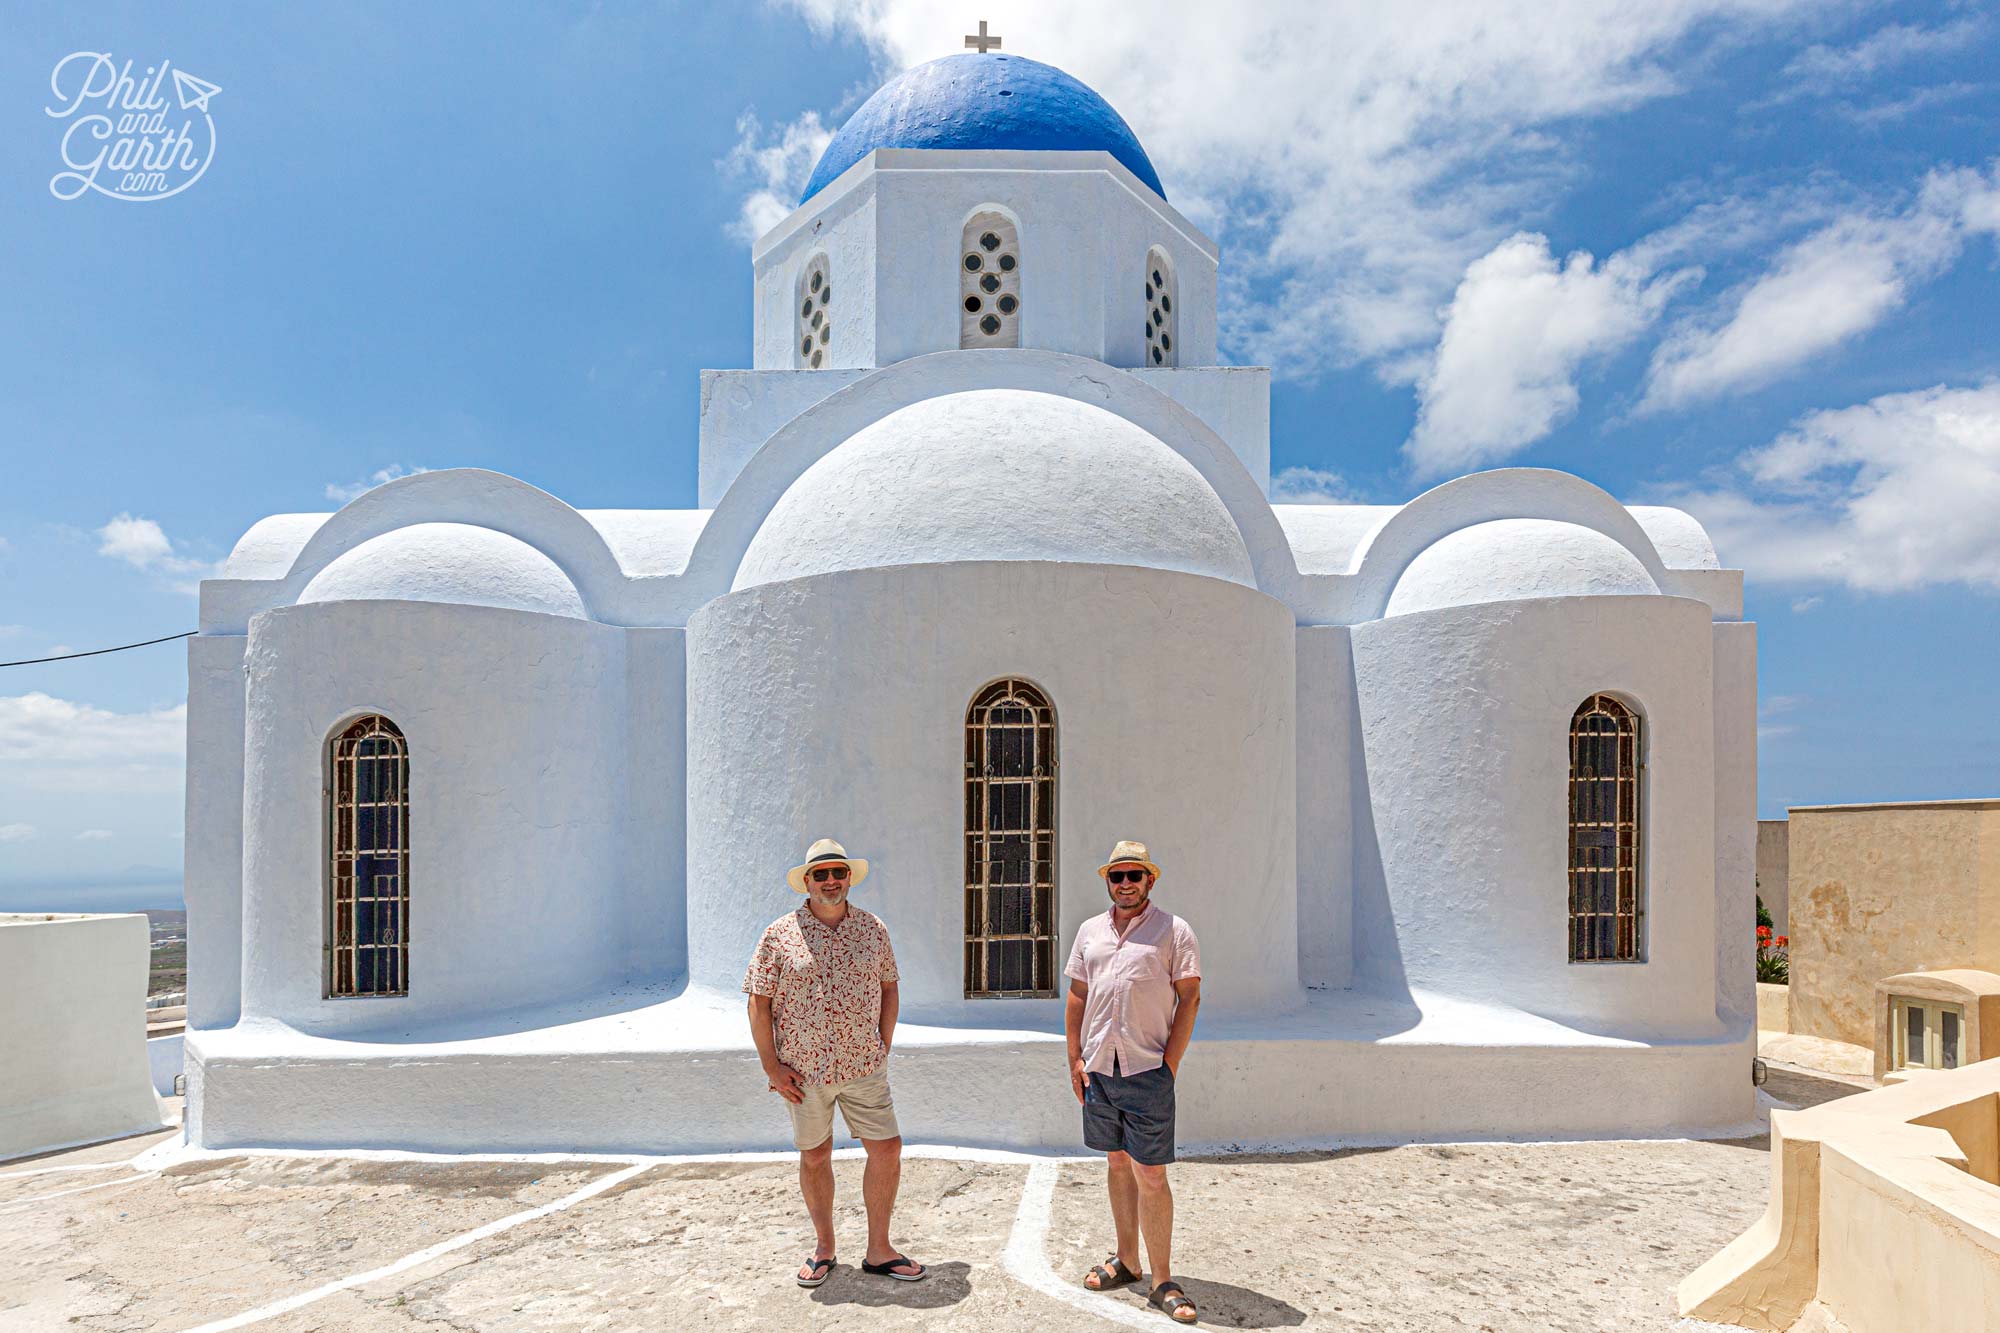 Santorini Instagram Spots: The church of Saint Theodosia in Pyrgos is our Instgram photo spot